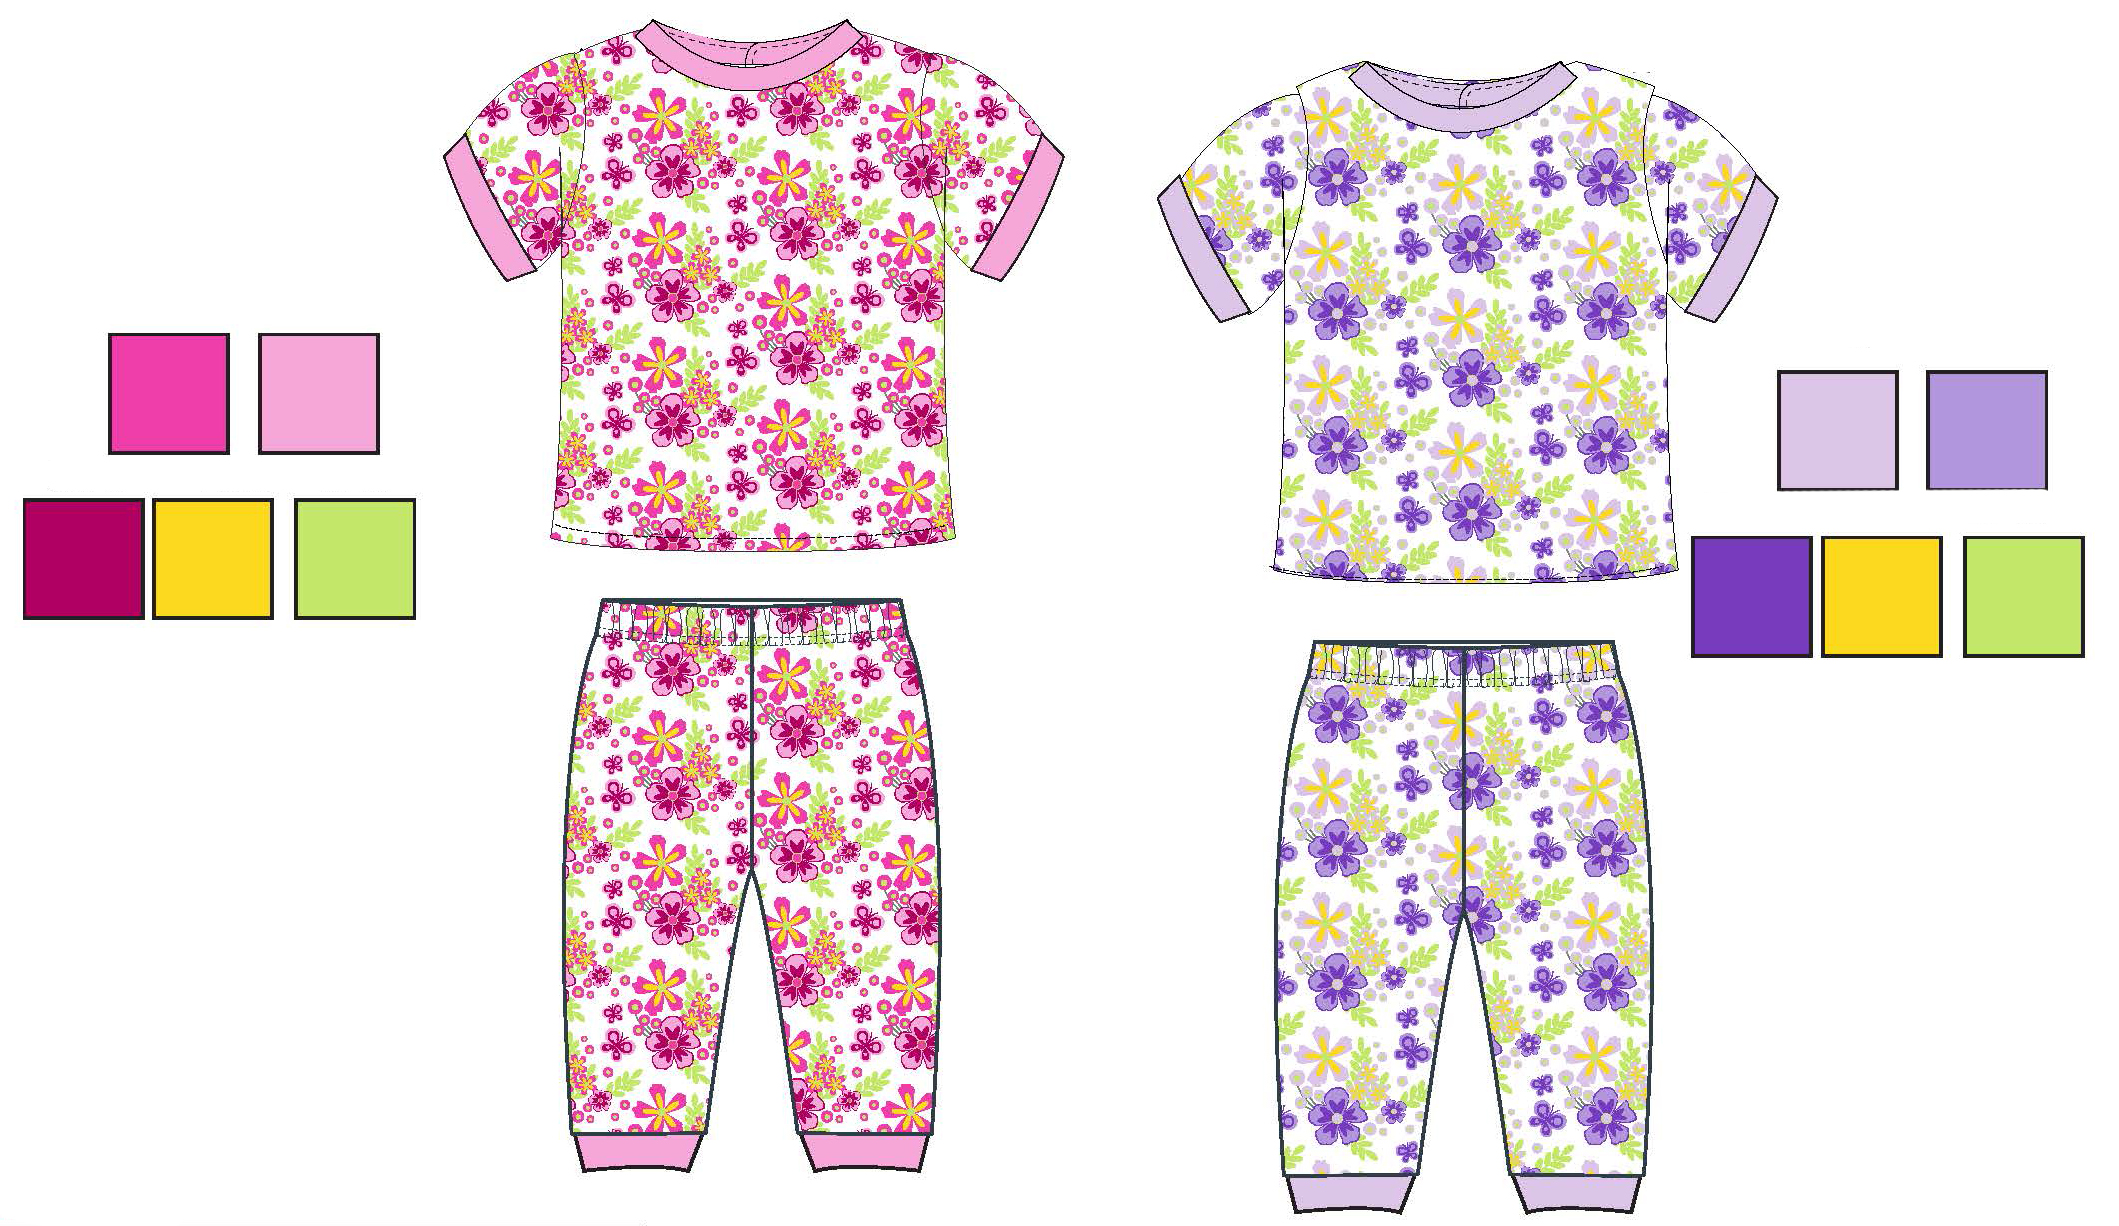 Baby Girl's 2 PC. Short-Sleeve Rib PAJAMAS Sets w/ Floral Print - Sizes 12M-24M